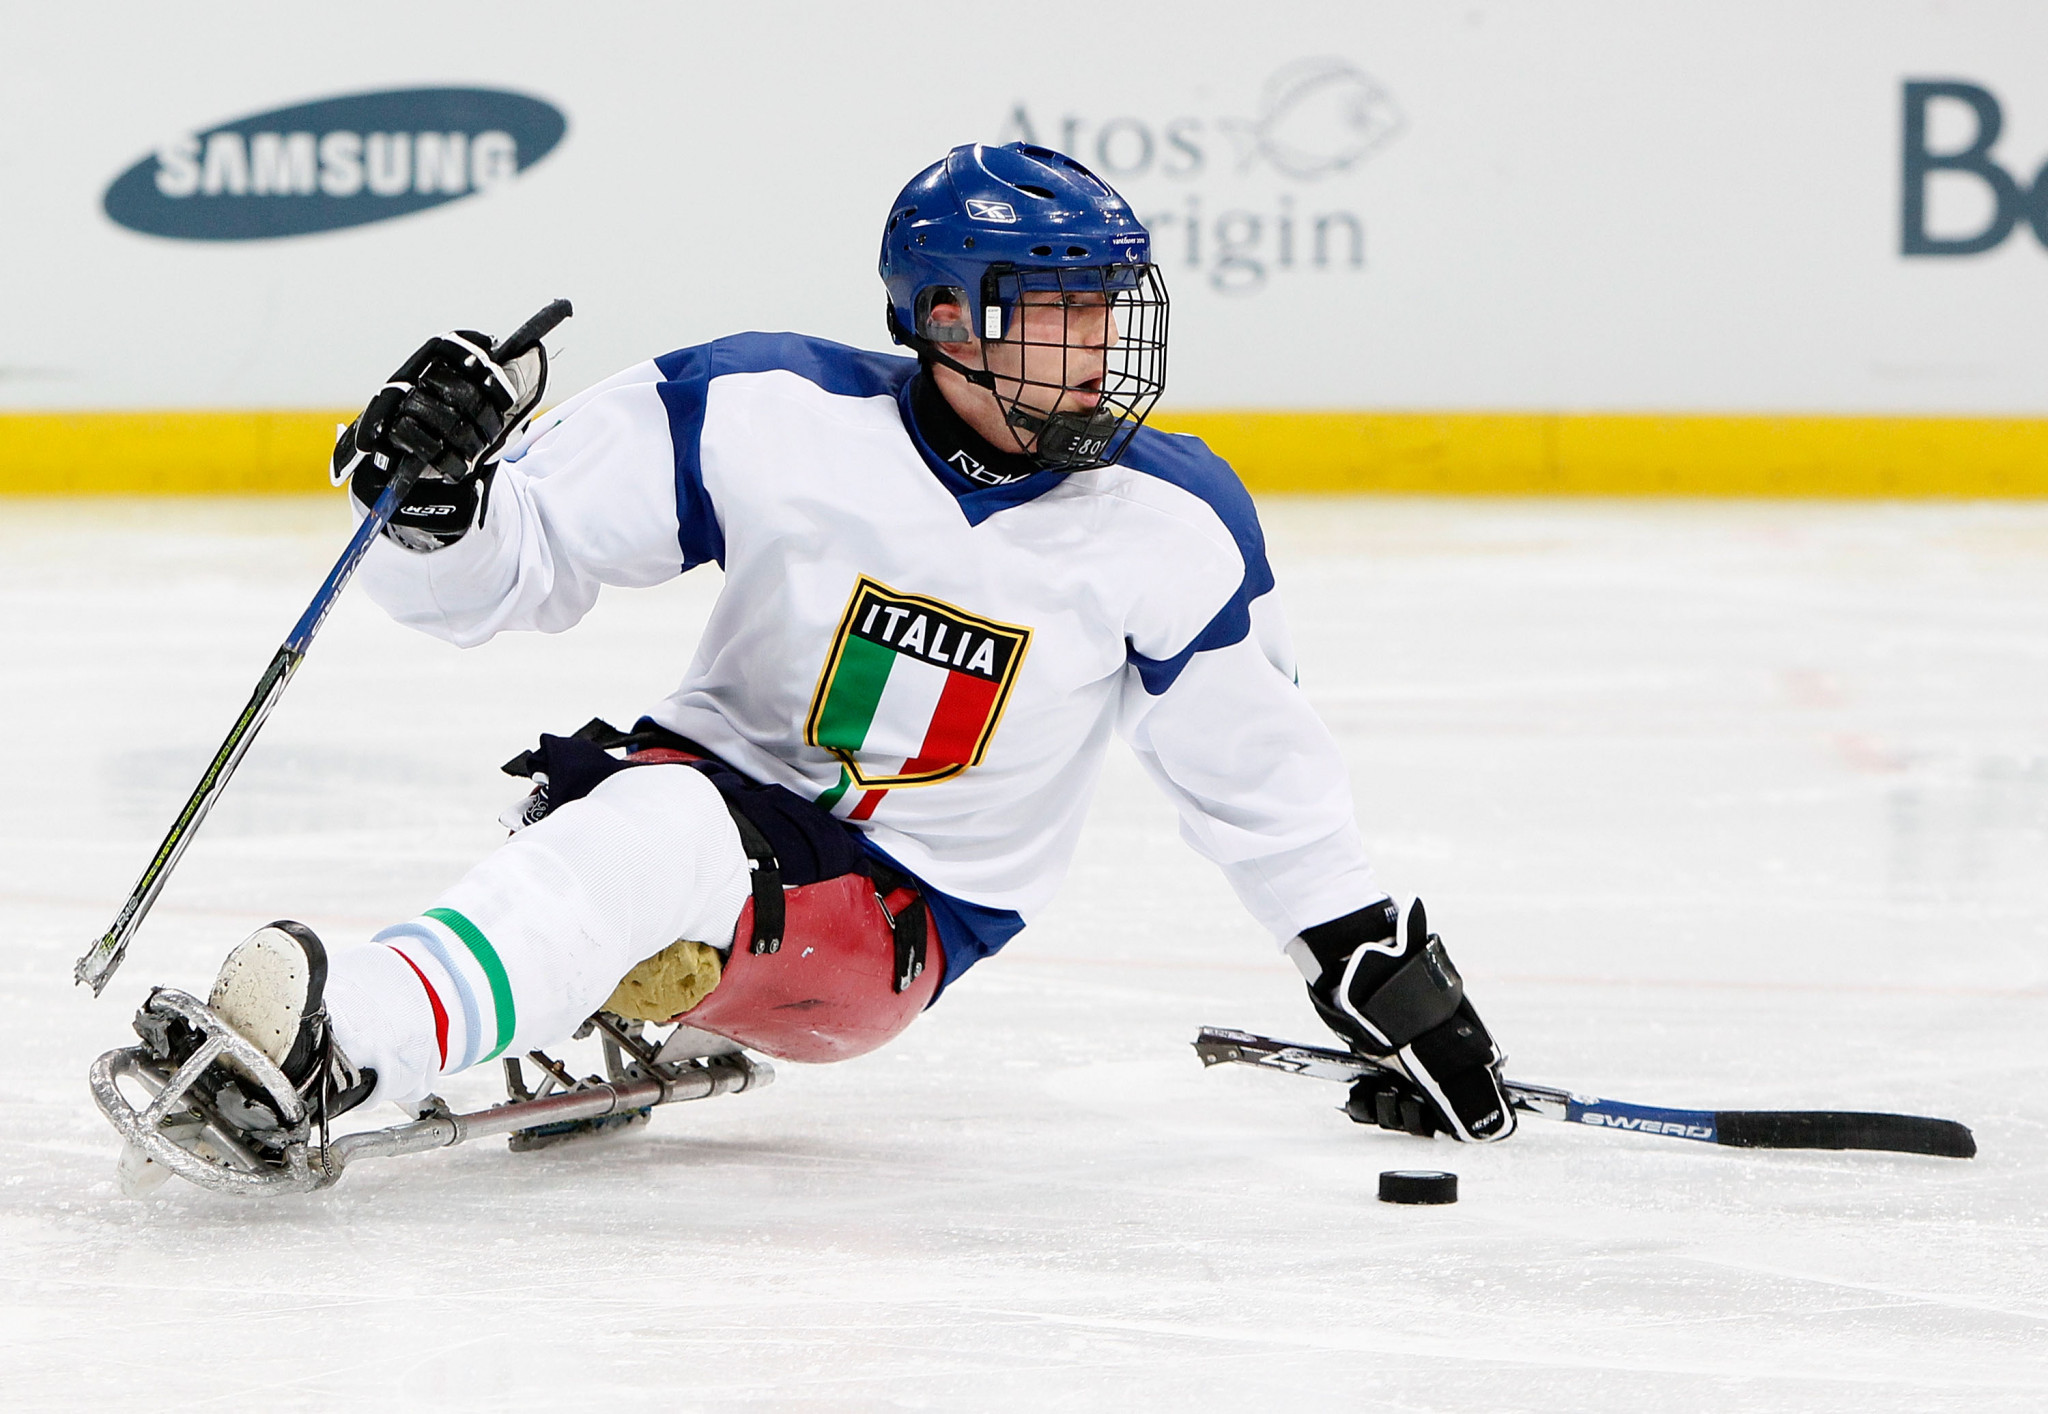 Rosa leads Italian Para ice hockey delegation at Beijing 2022